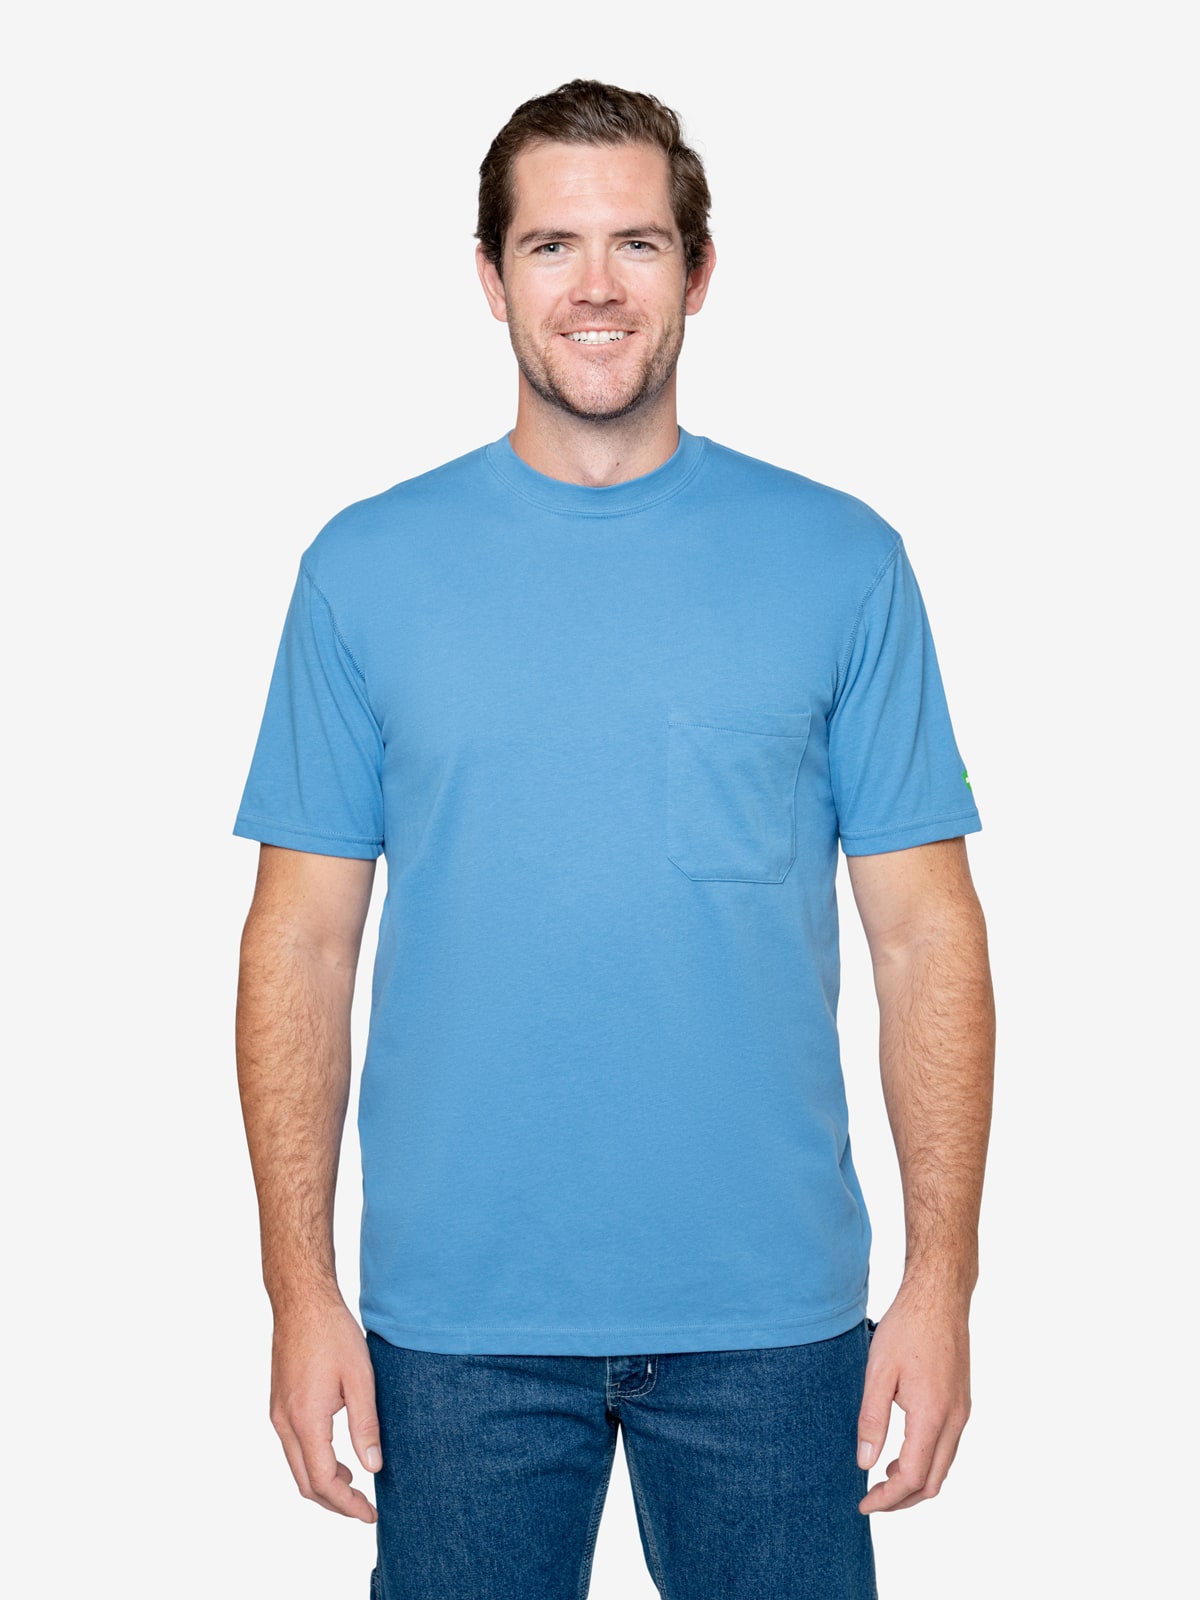 Insect Shield Men's UPF Dri-Balance Short Sleeve Pocket T-Shirt